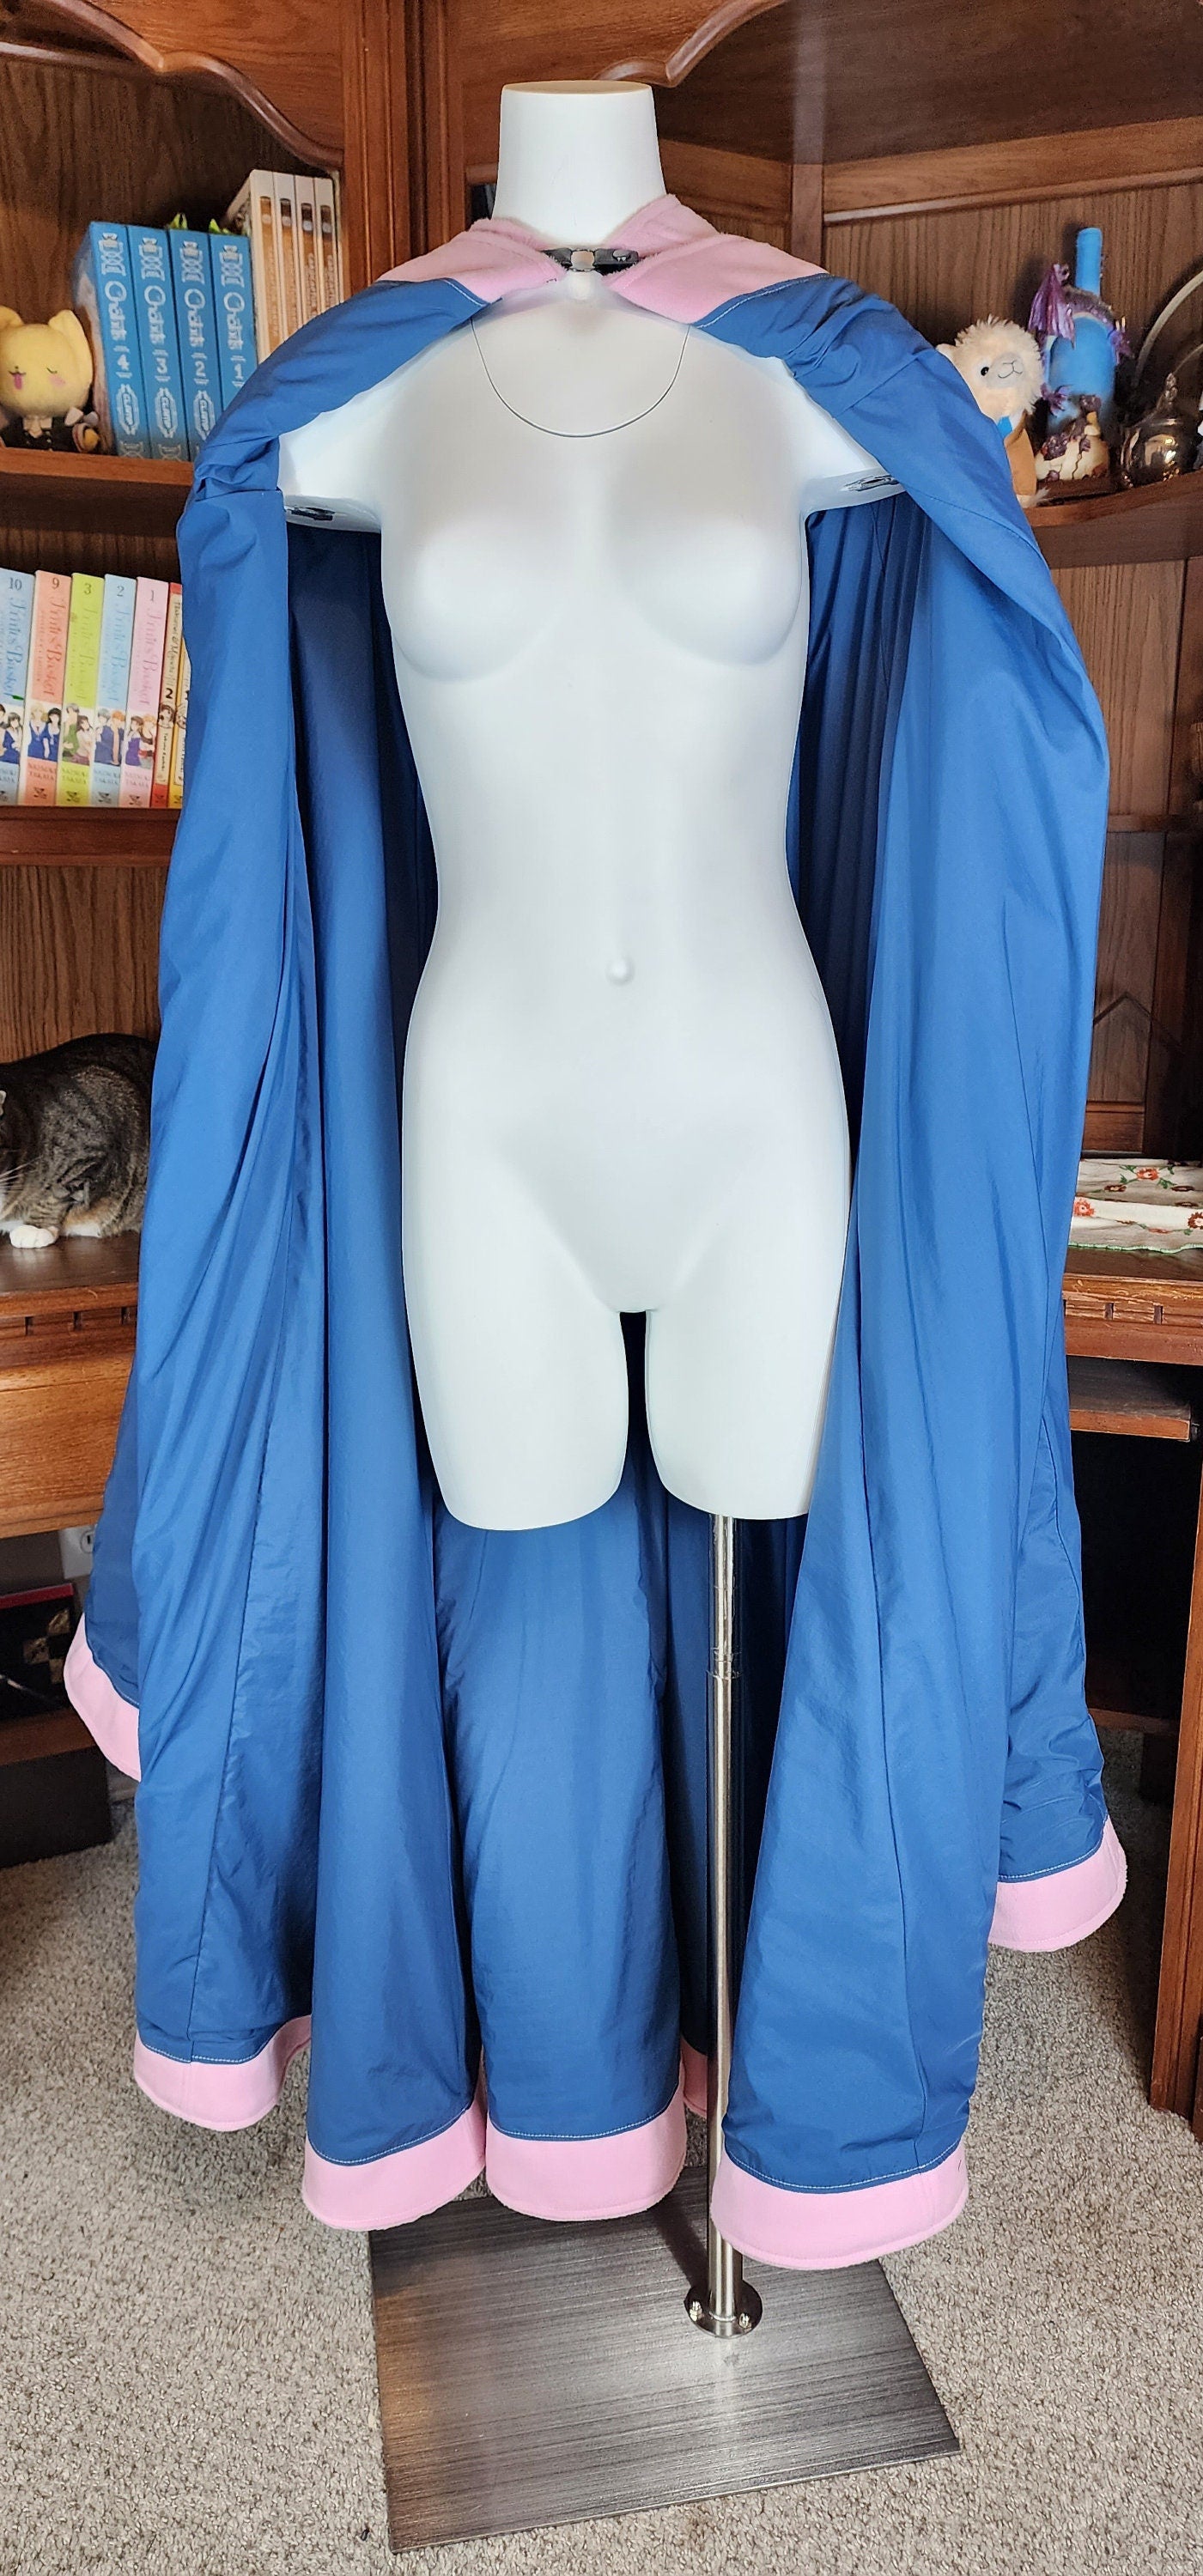 Winter Wanderer Cloak- Bubblegum Pink cloak with Blue water resistant lining